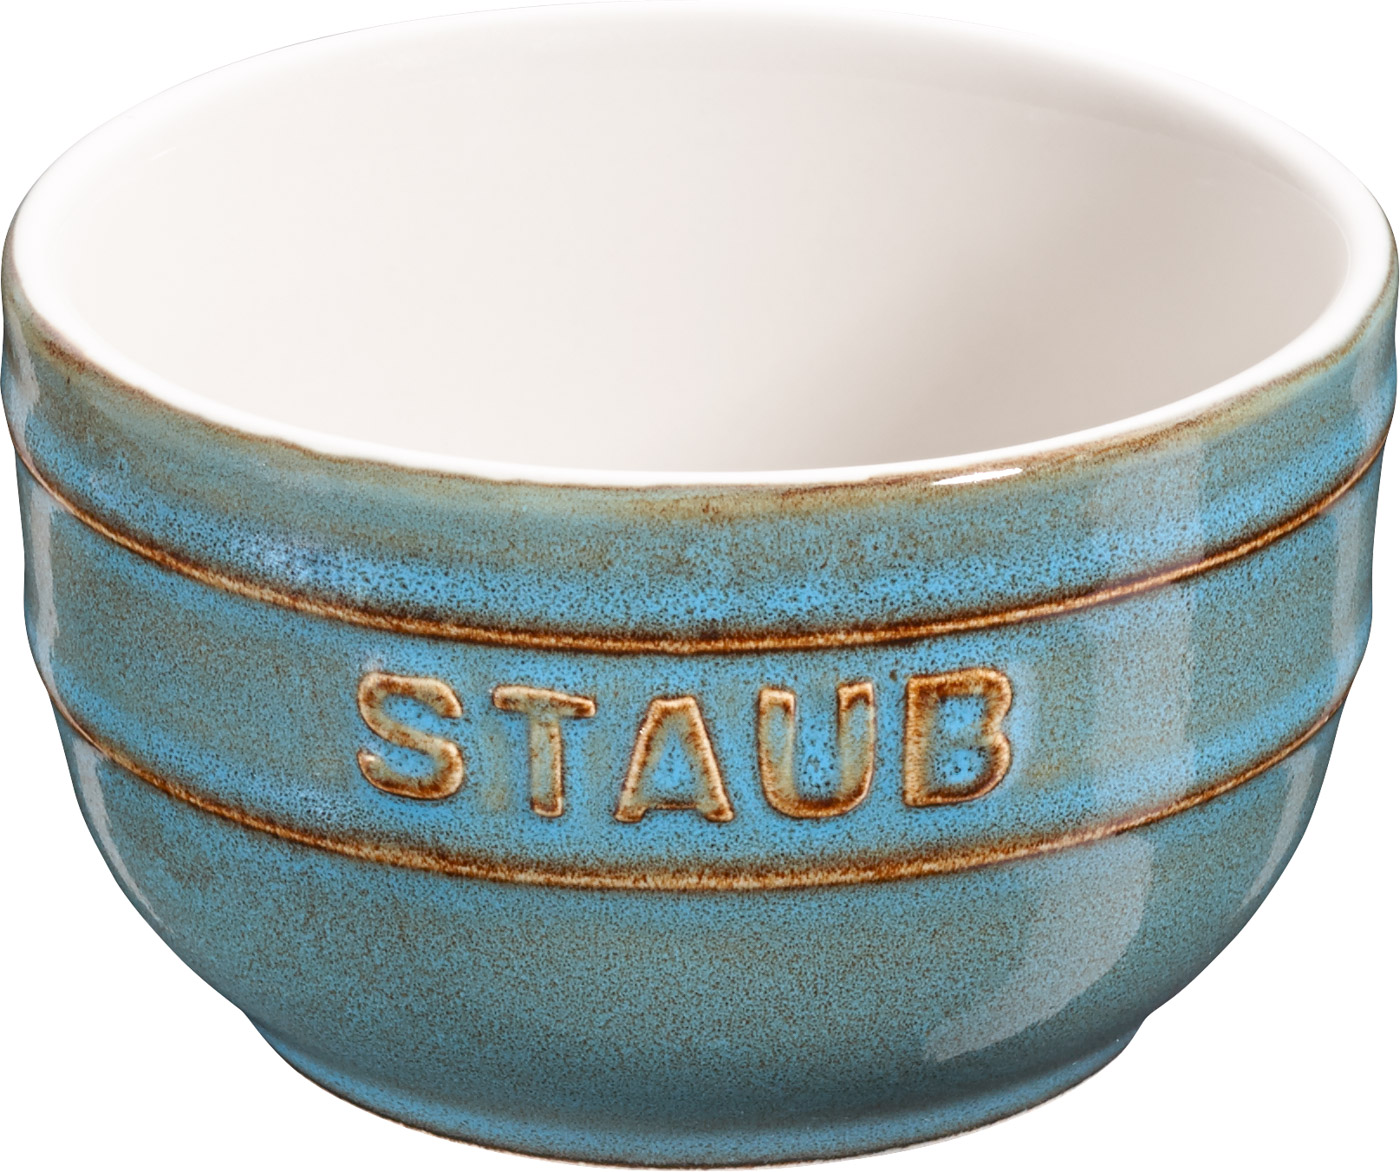 Förmchenset, 2-tlg, Antik-Türkis, Keramik, Serie: Ceramique. Marke: Staub